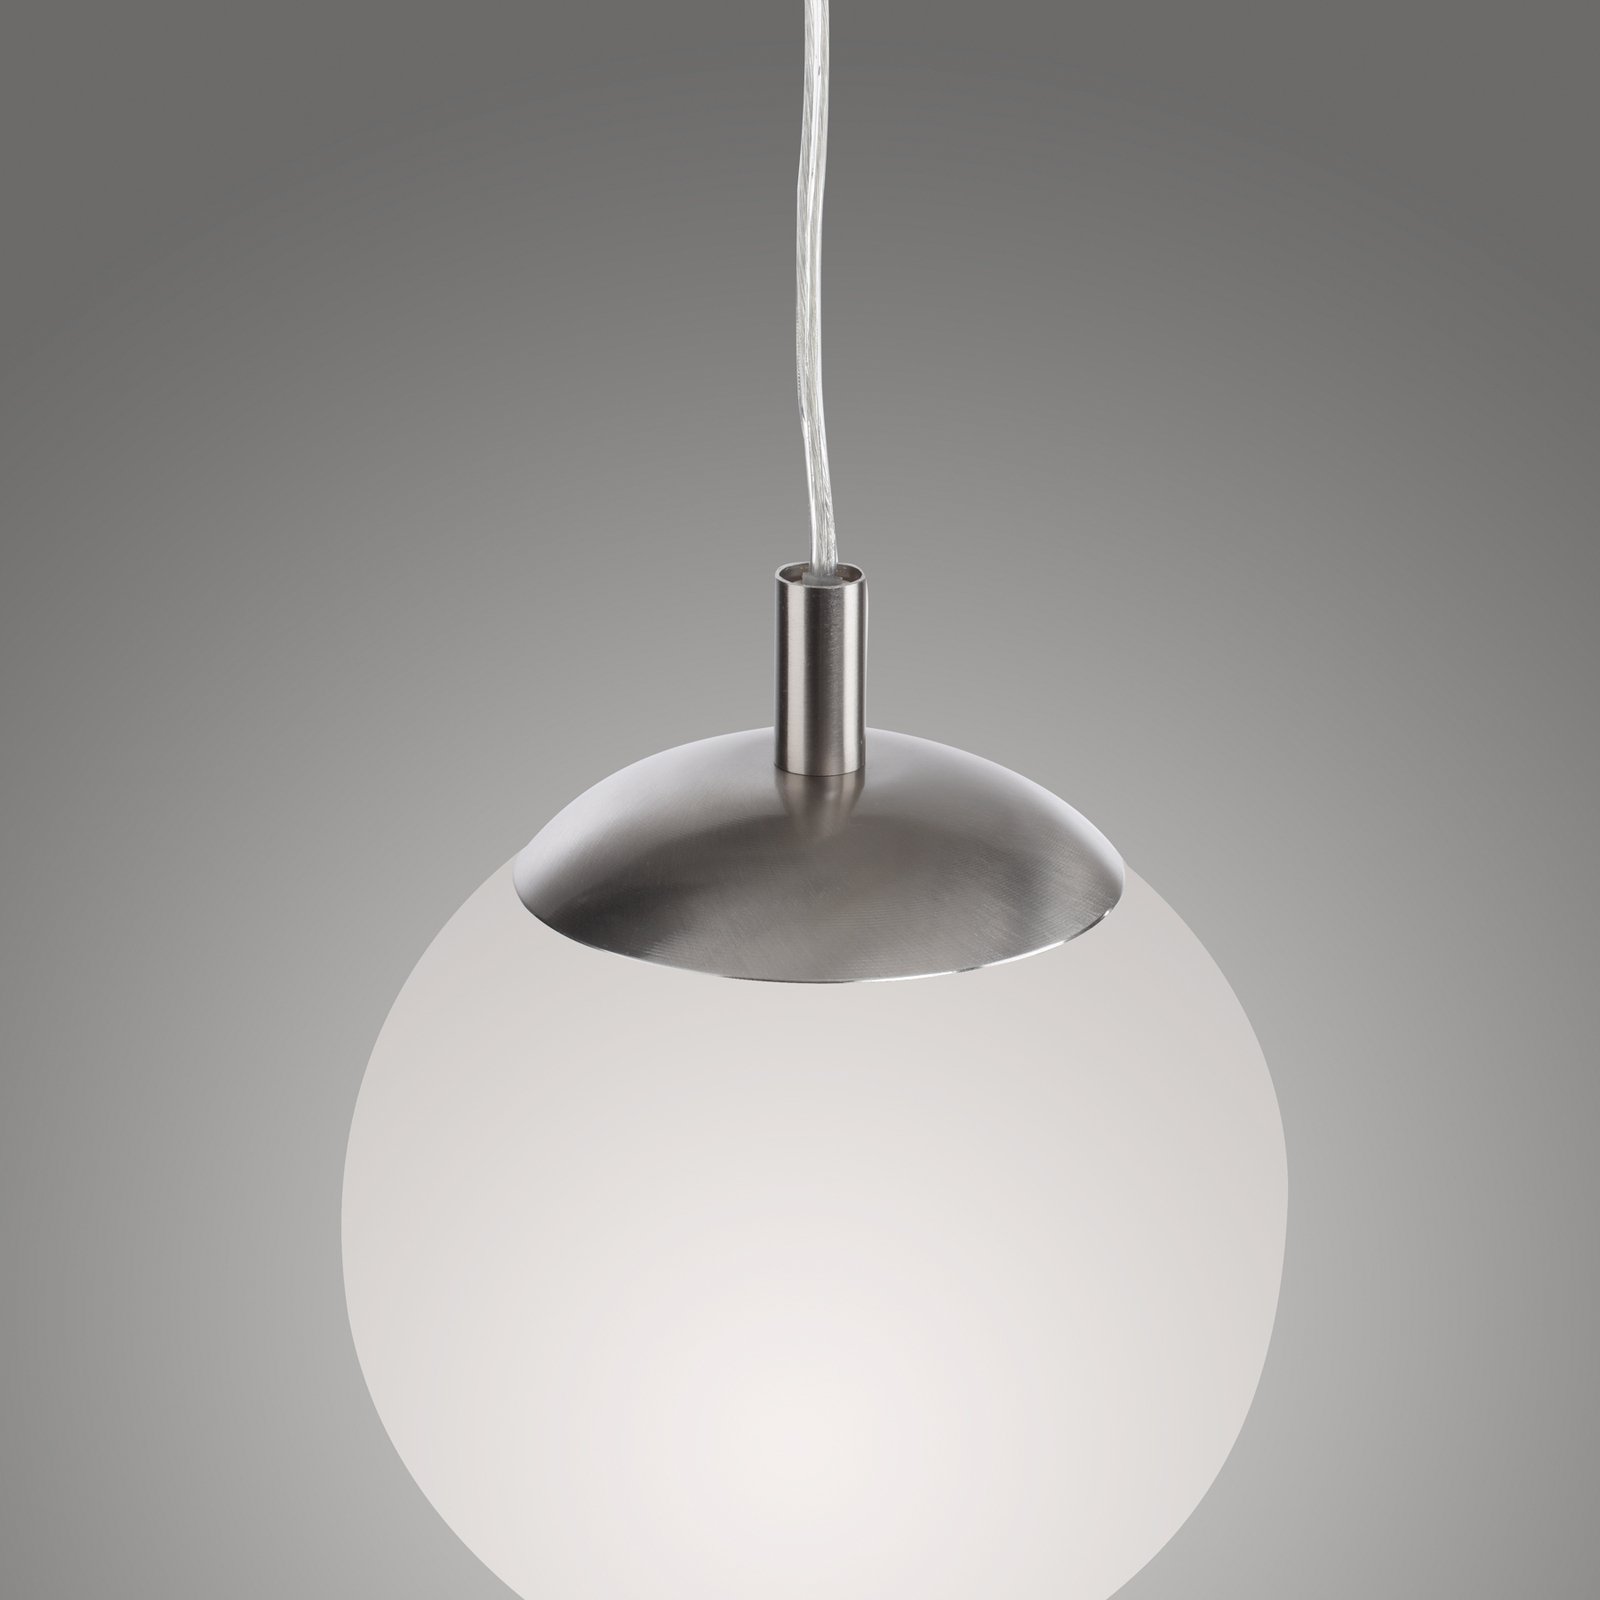 Lampa wisząca Paul Neuhaus Bolo, szklany klosz, Ø 20 cm